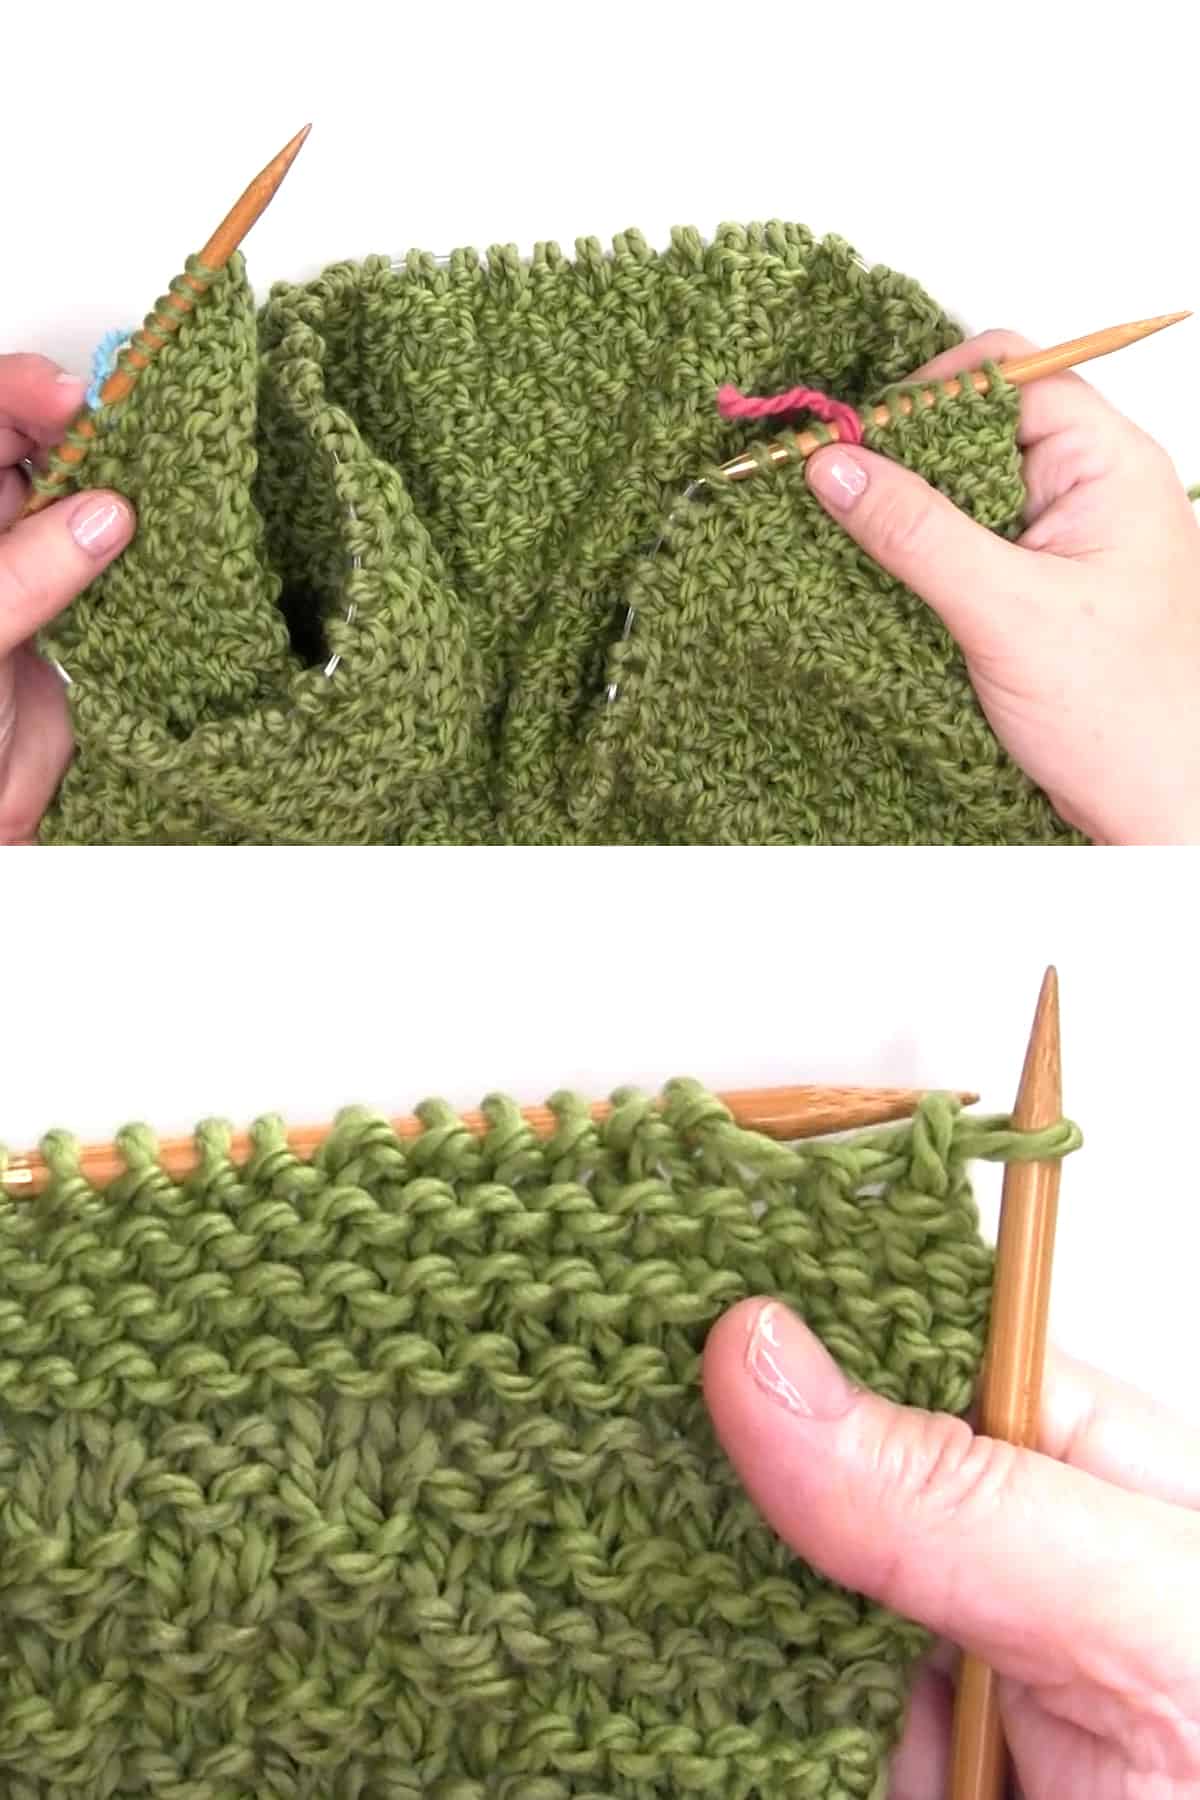 Knitting the Moss Landing blanket finishing with border on needles.